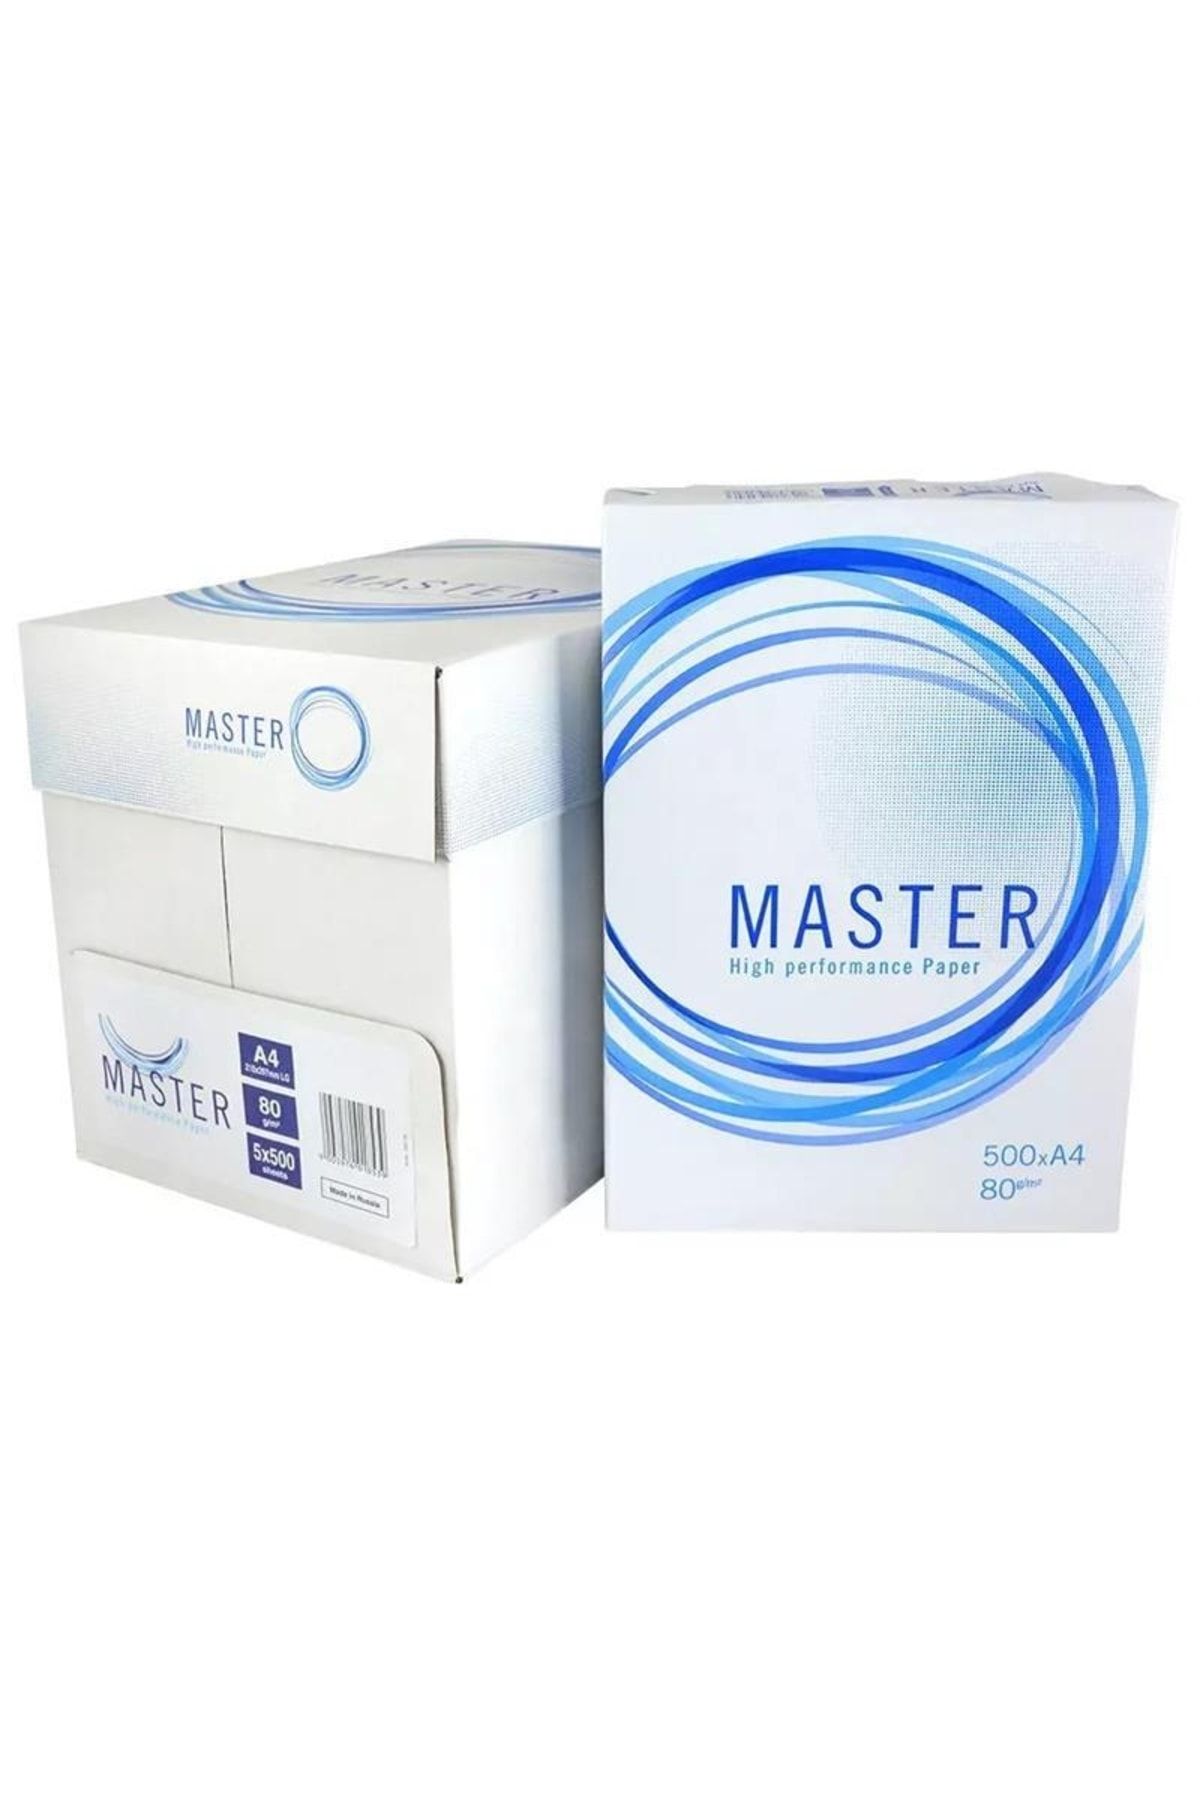 Master Master A4 Fotokopi Kağıdı 80 gr 1 Koli (5 Paket & 2500 sayfa)